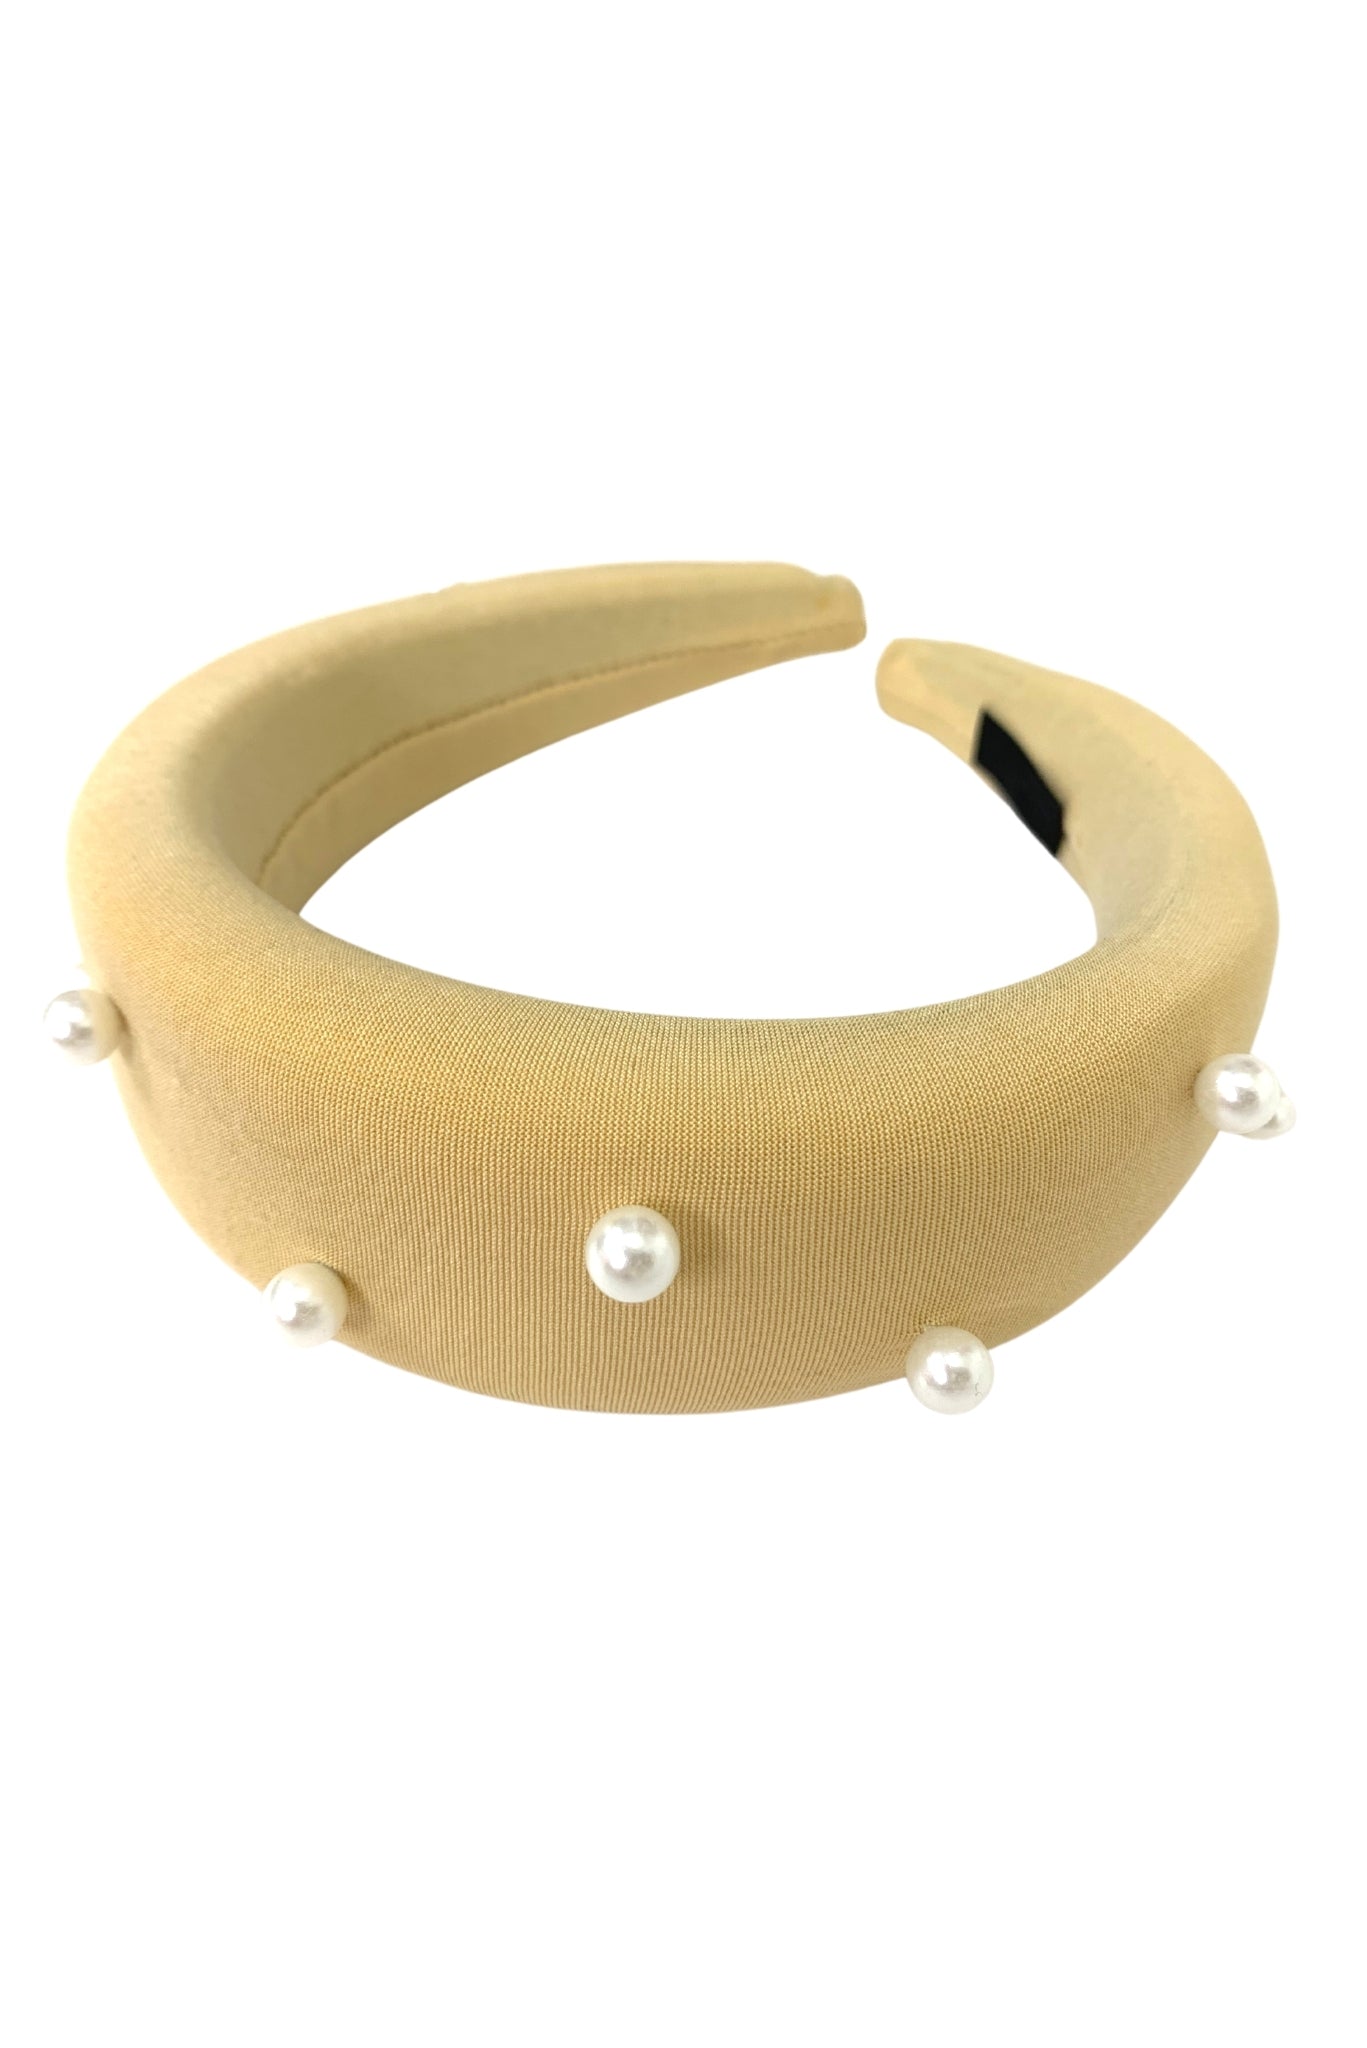 Nude Pearl Headband*FINAL SALE*